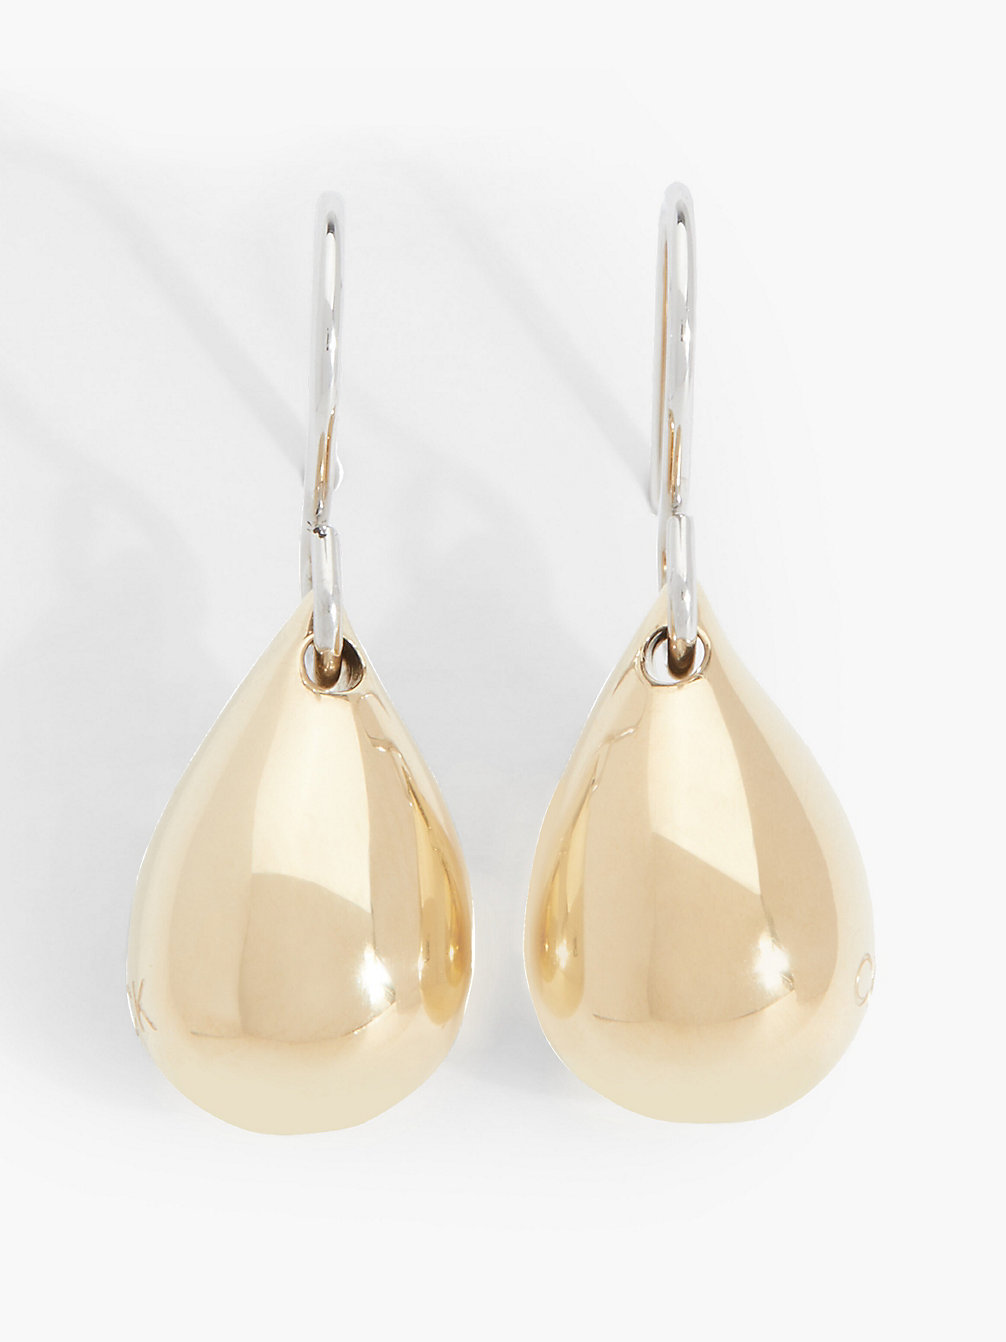 GOLD Earrings - Sculptured Drops undefined women Calvin Klein